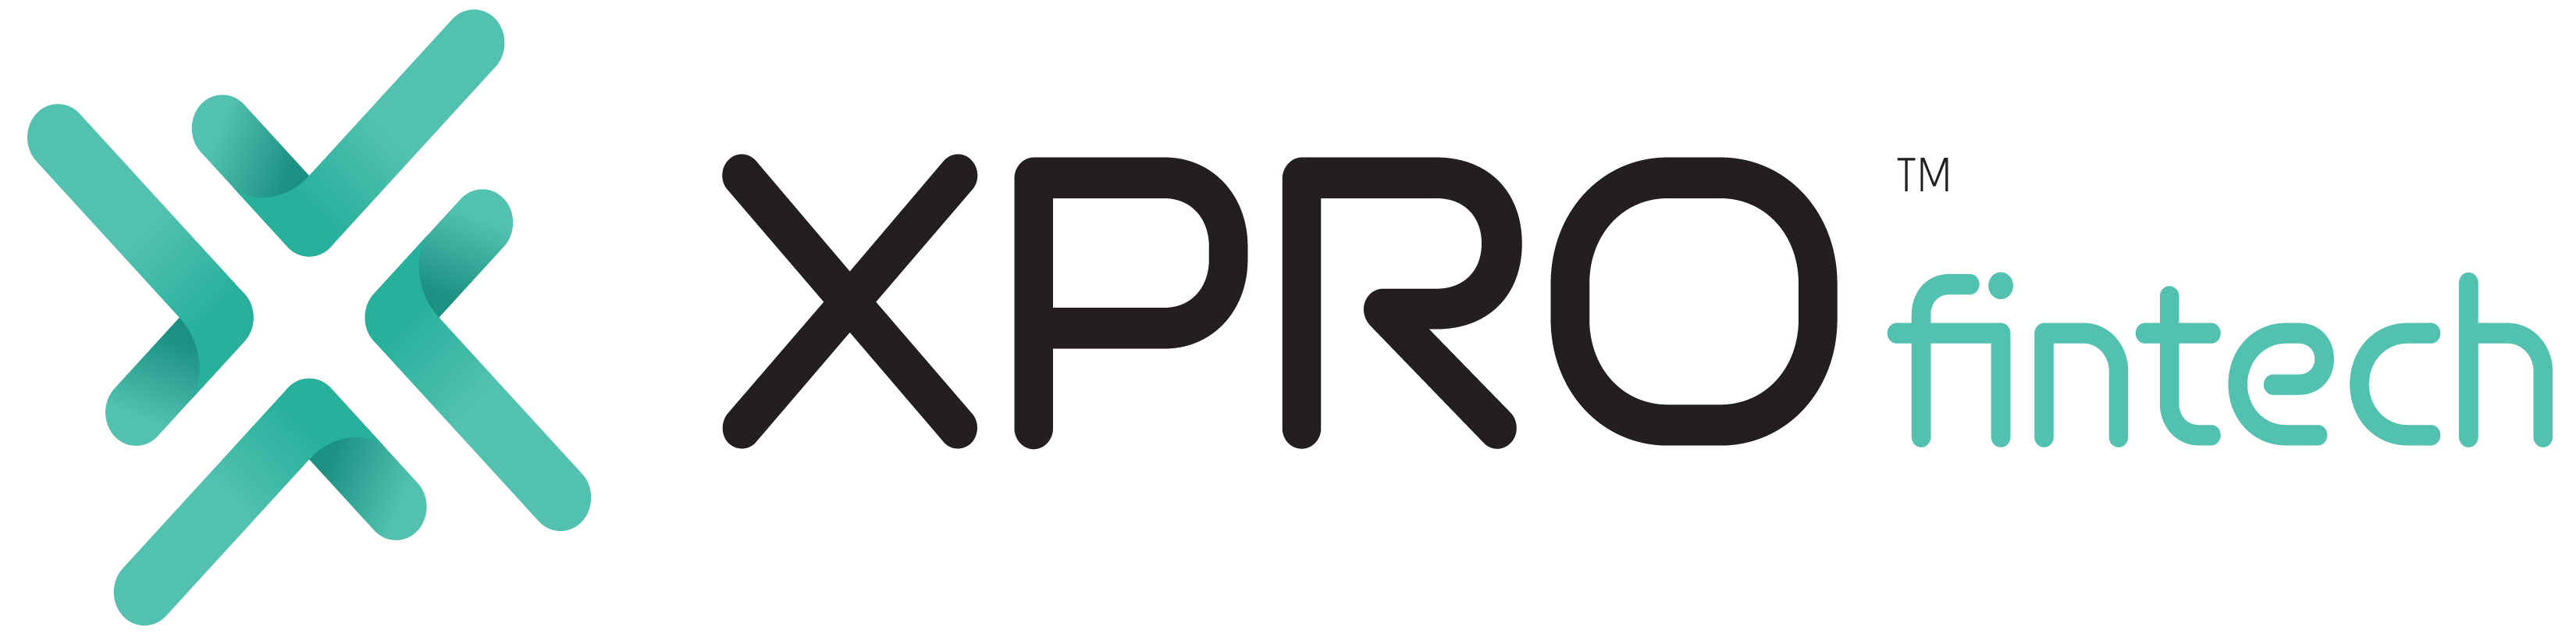 XPROfintech logo-01.png